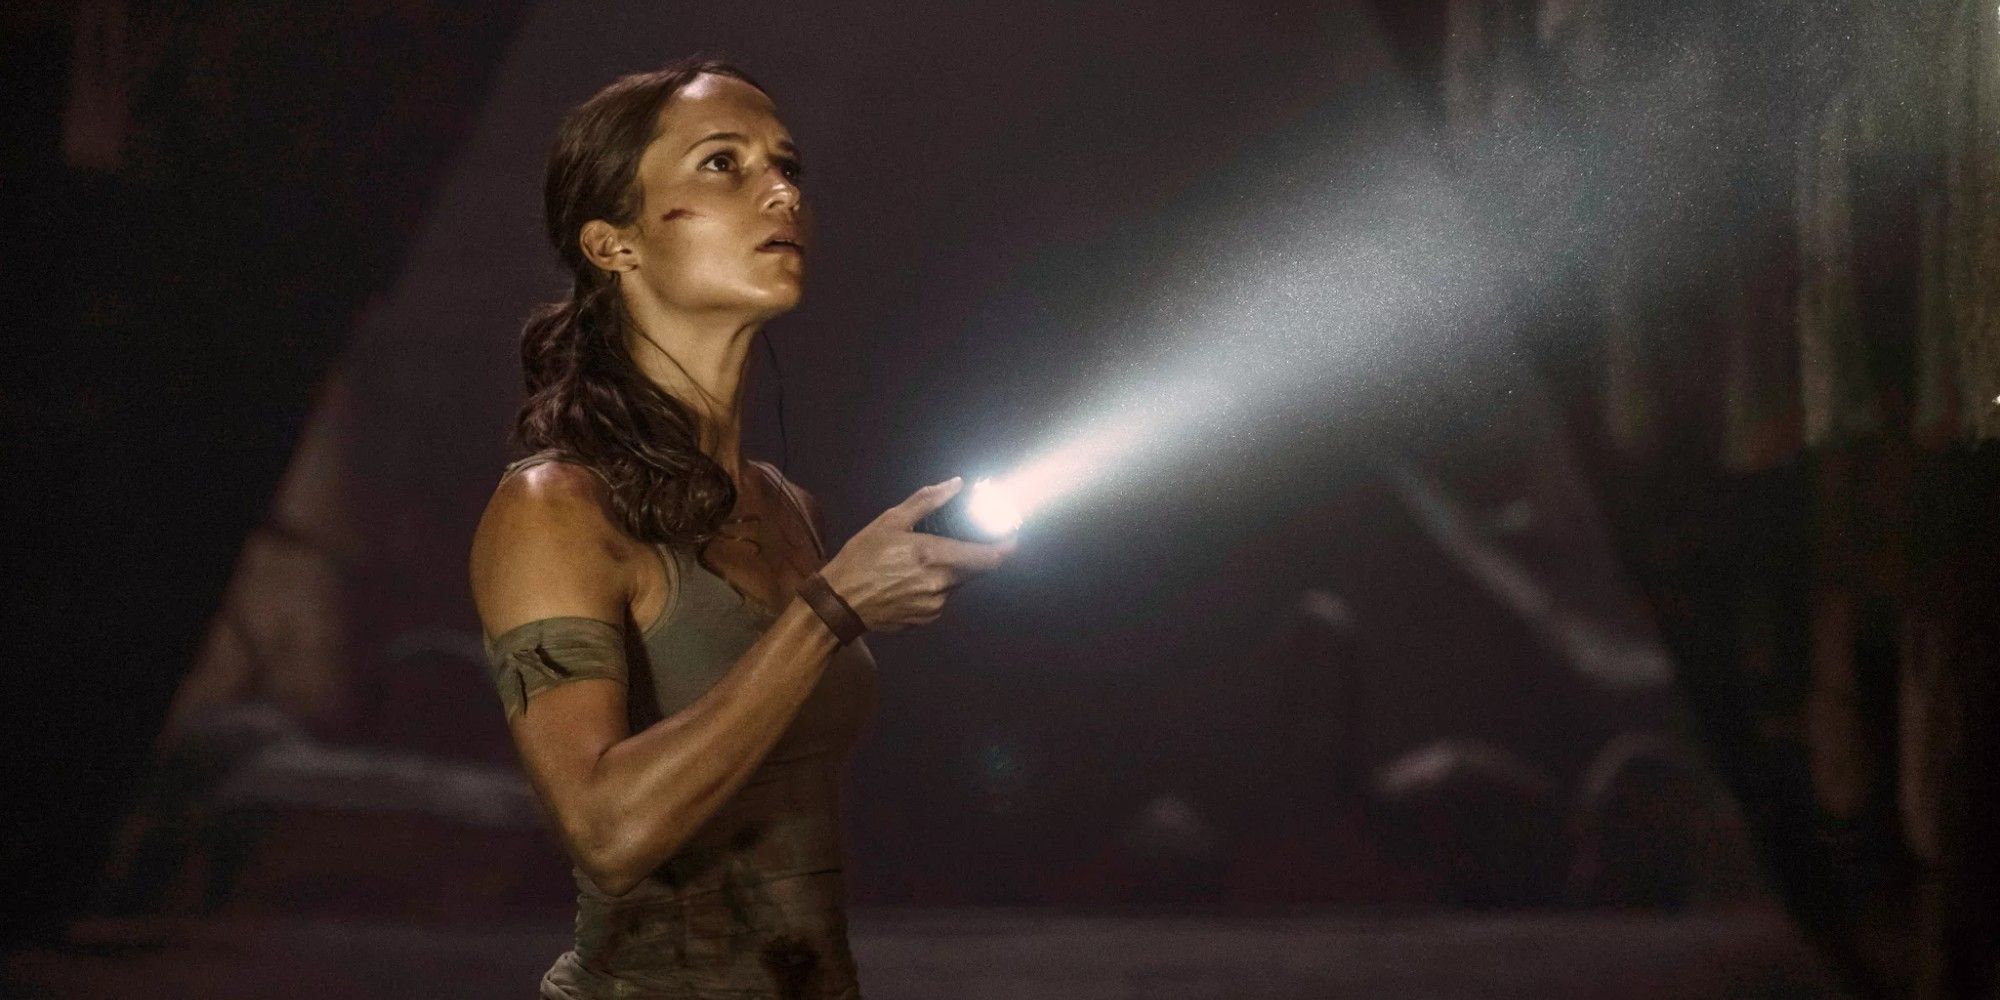 Tomb Raider Trailer Has Alicia Vikander's Lara Croft Barely Dodging Death